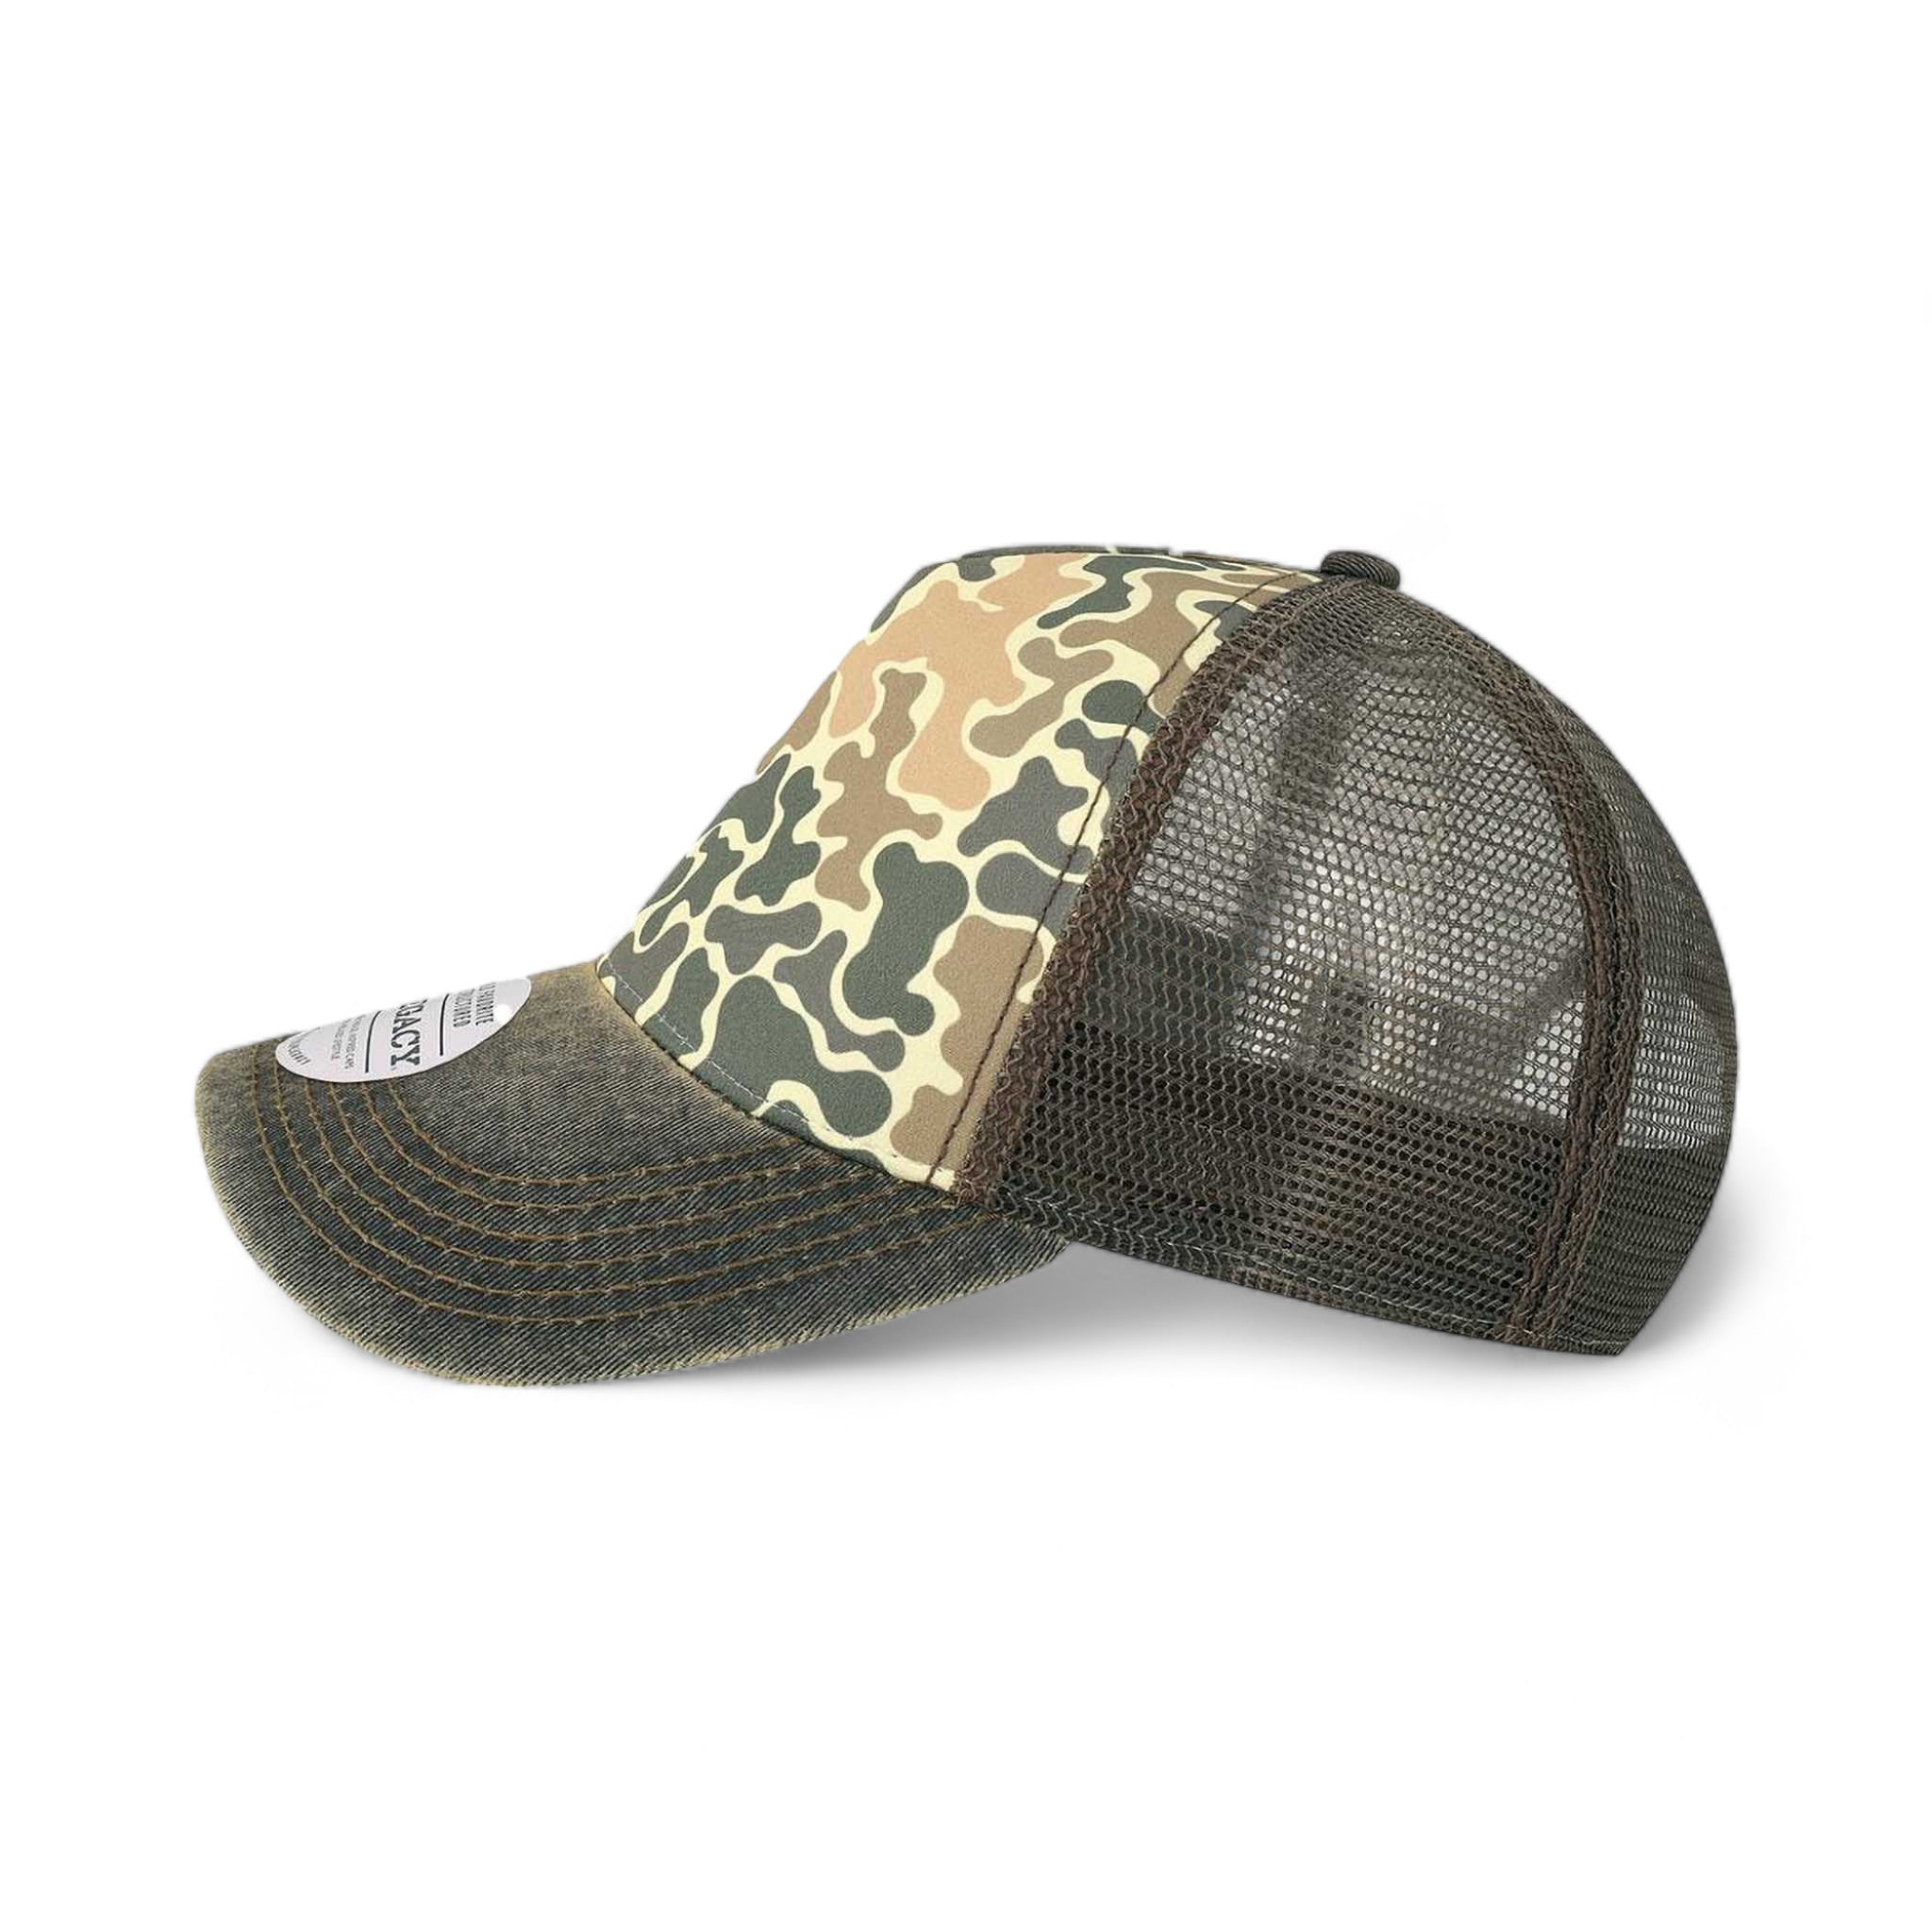 Side view of LEGACY OFAFP custom hat in brown camo blotch